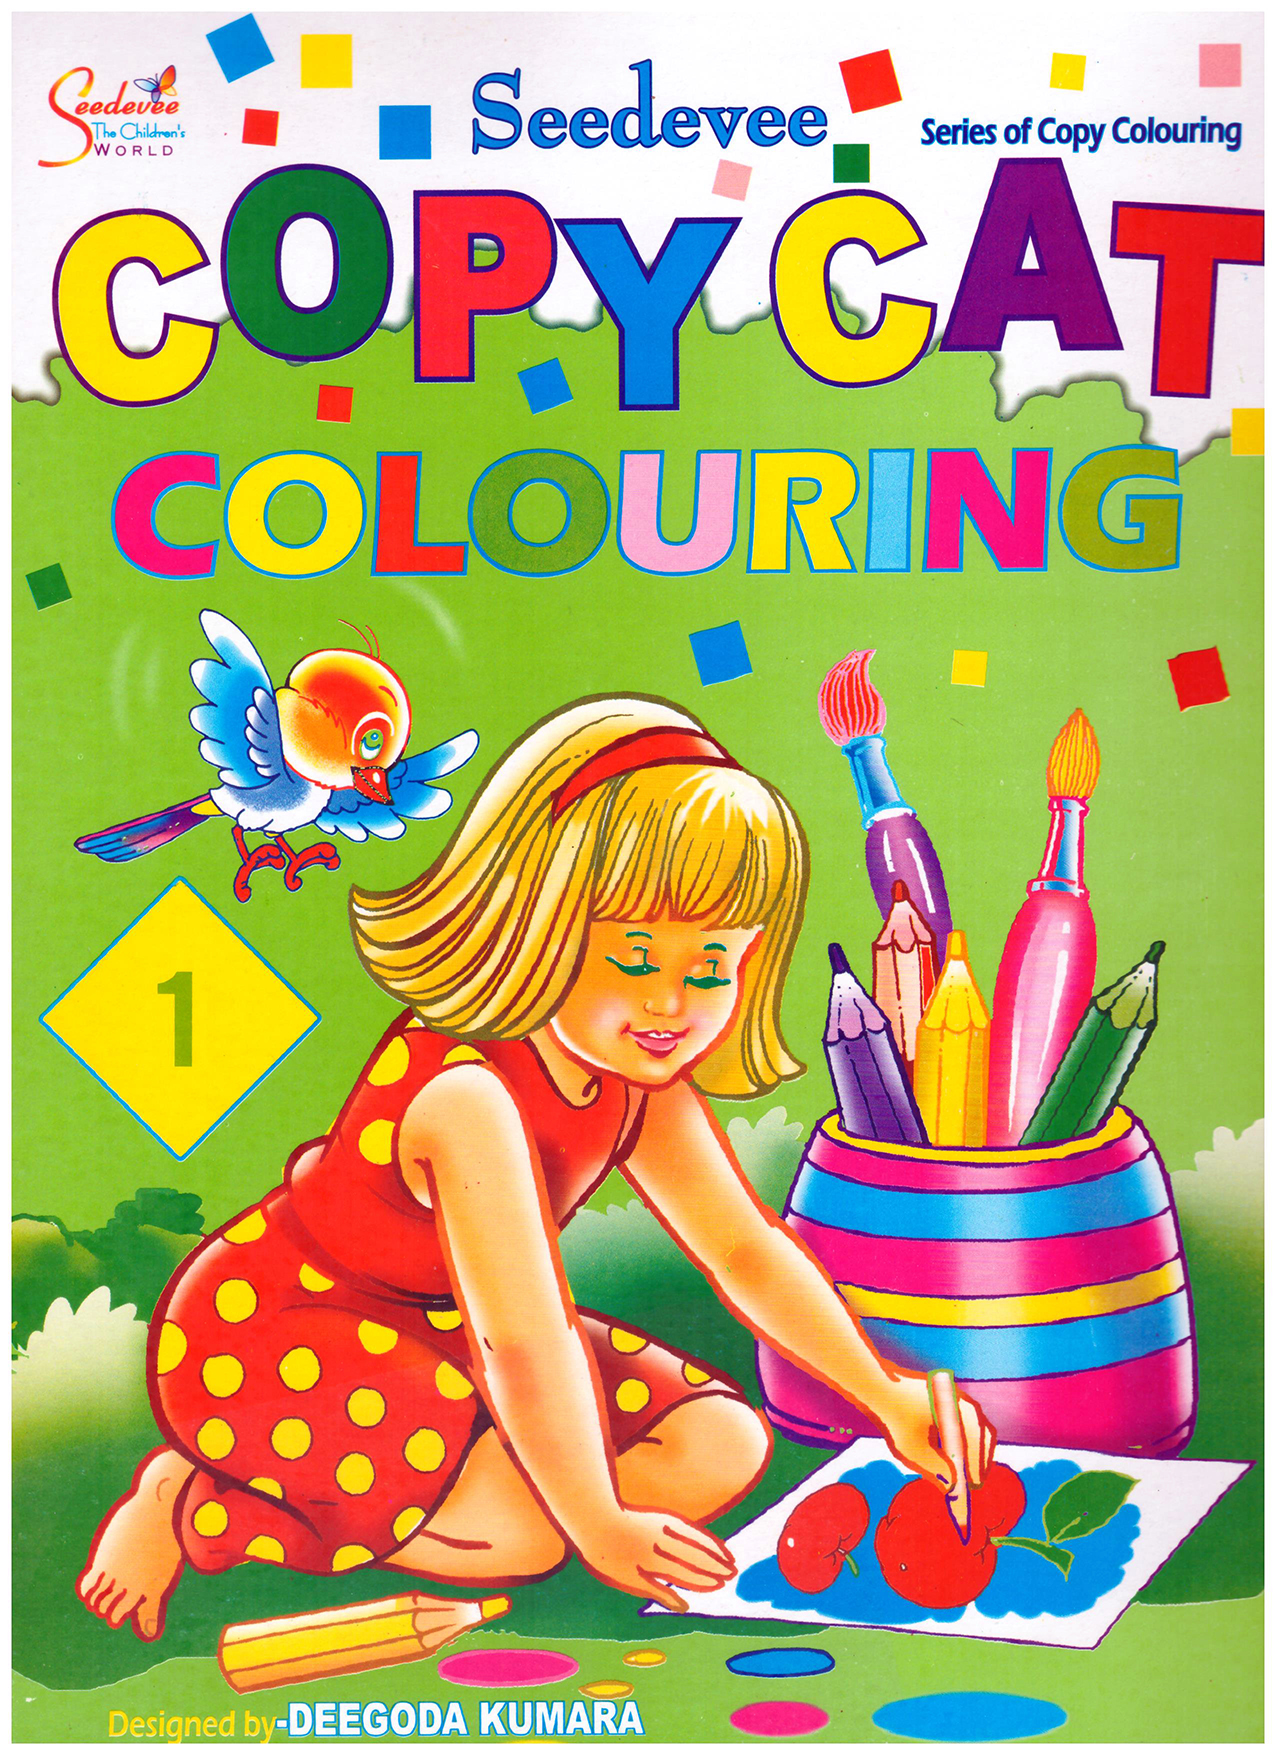 Seedevee Copy Cat Colouring Book 1